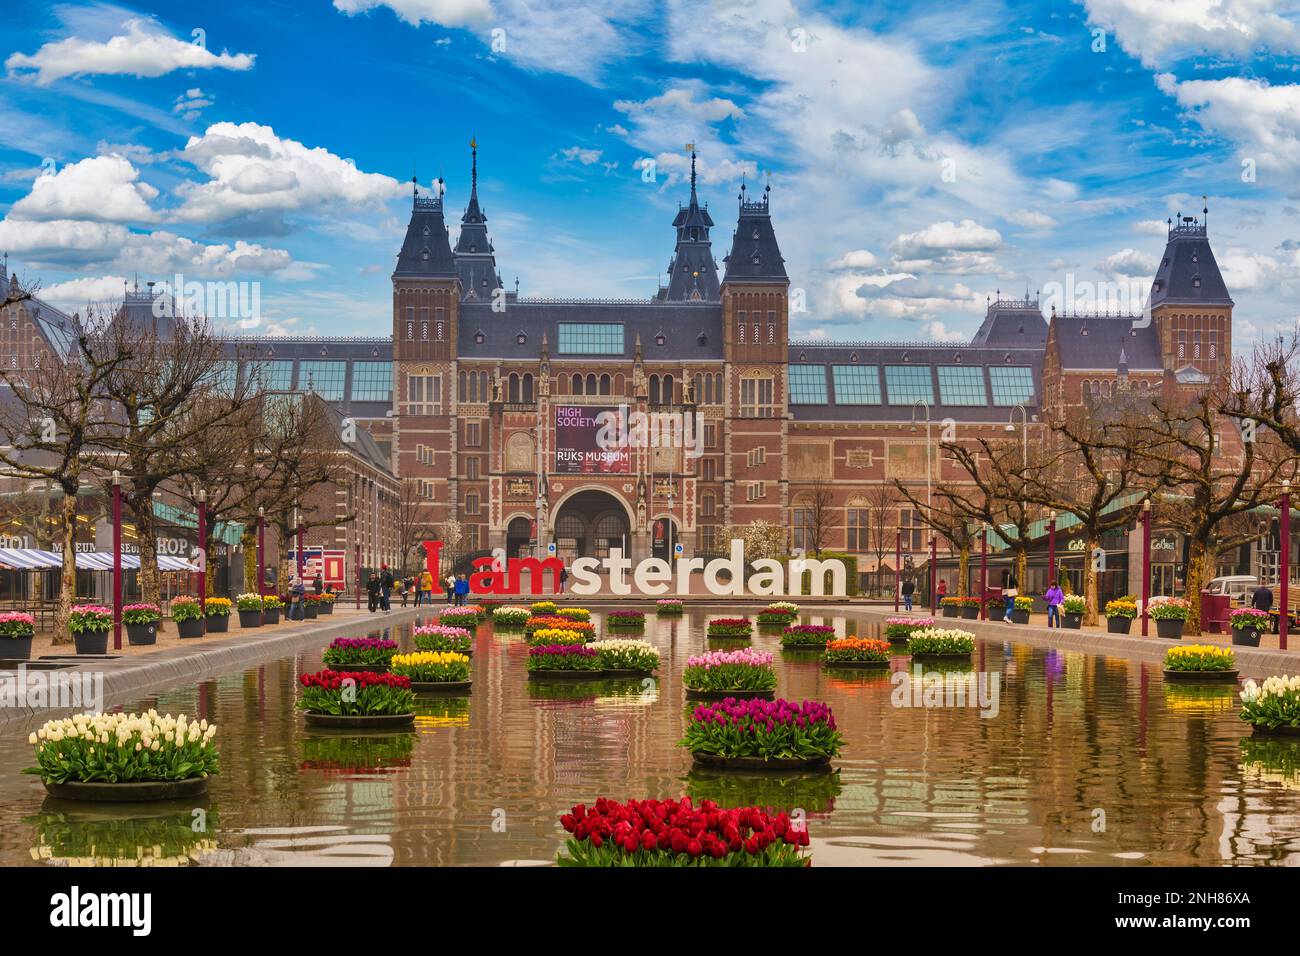 Amsterdam, Niederlande - 15. April 2018: Amsterdam Niederlande, City Skyline im Rijksmuseum (Dutch National Museum) und I Amsterdam Sign with tulib fl Stockfoto